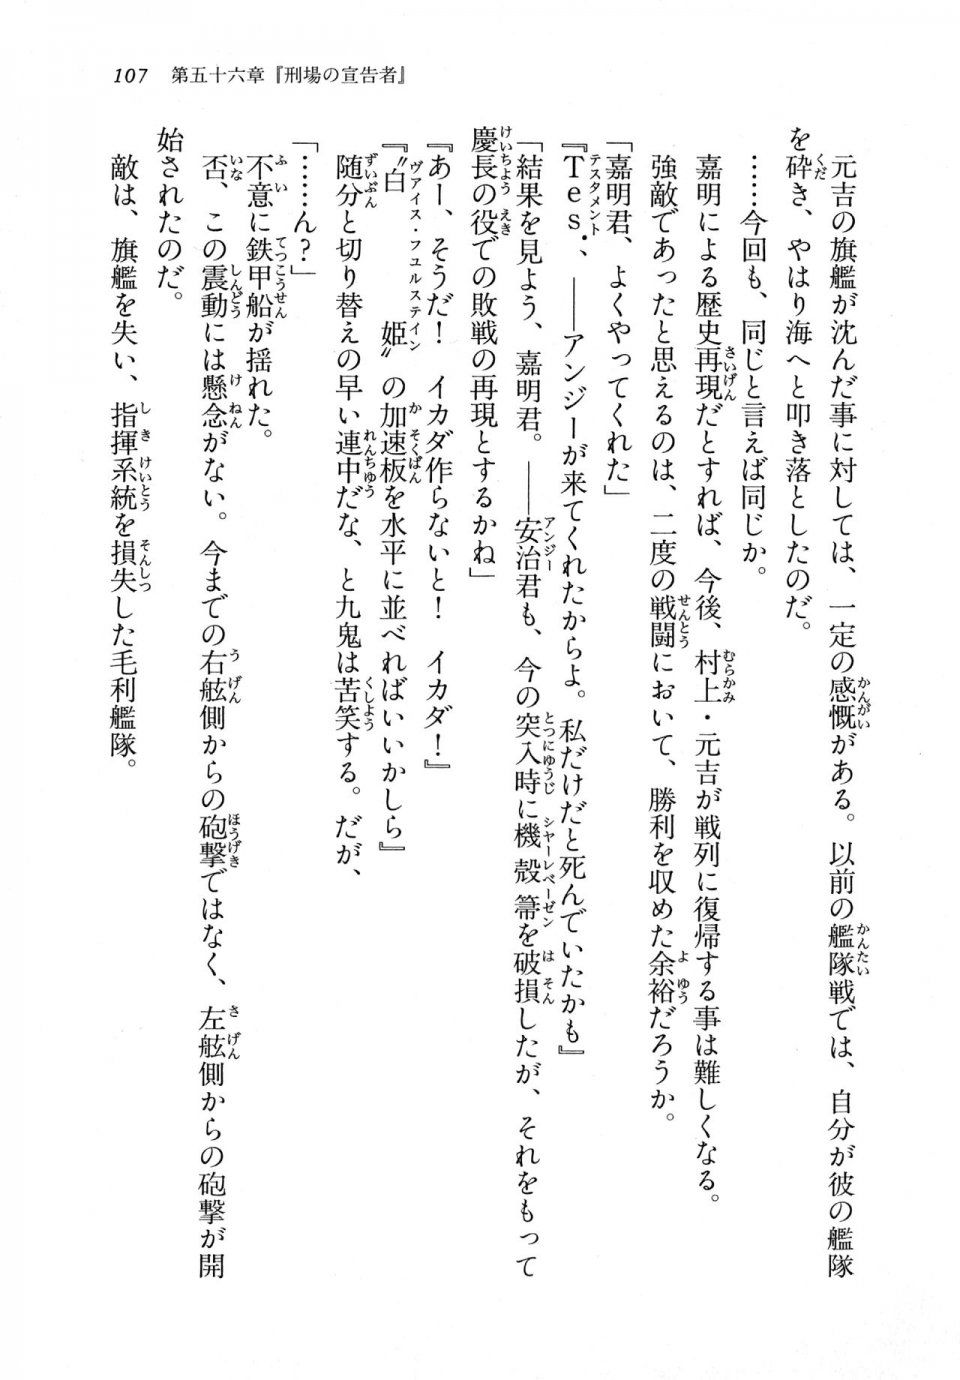 Kyoukai Senjou no Horizon LN Vol 18(7C) Part 1 - Photo #107